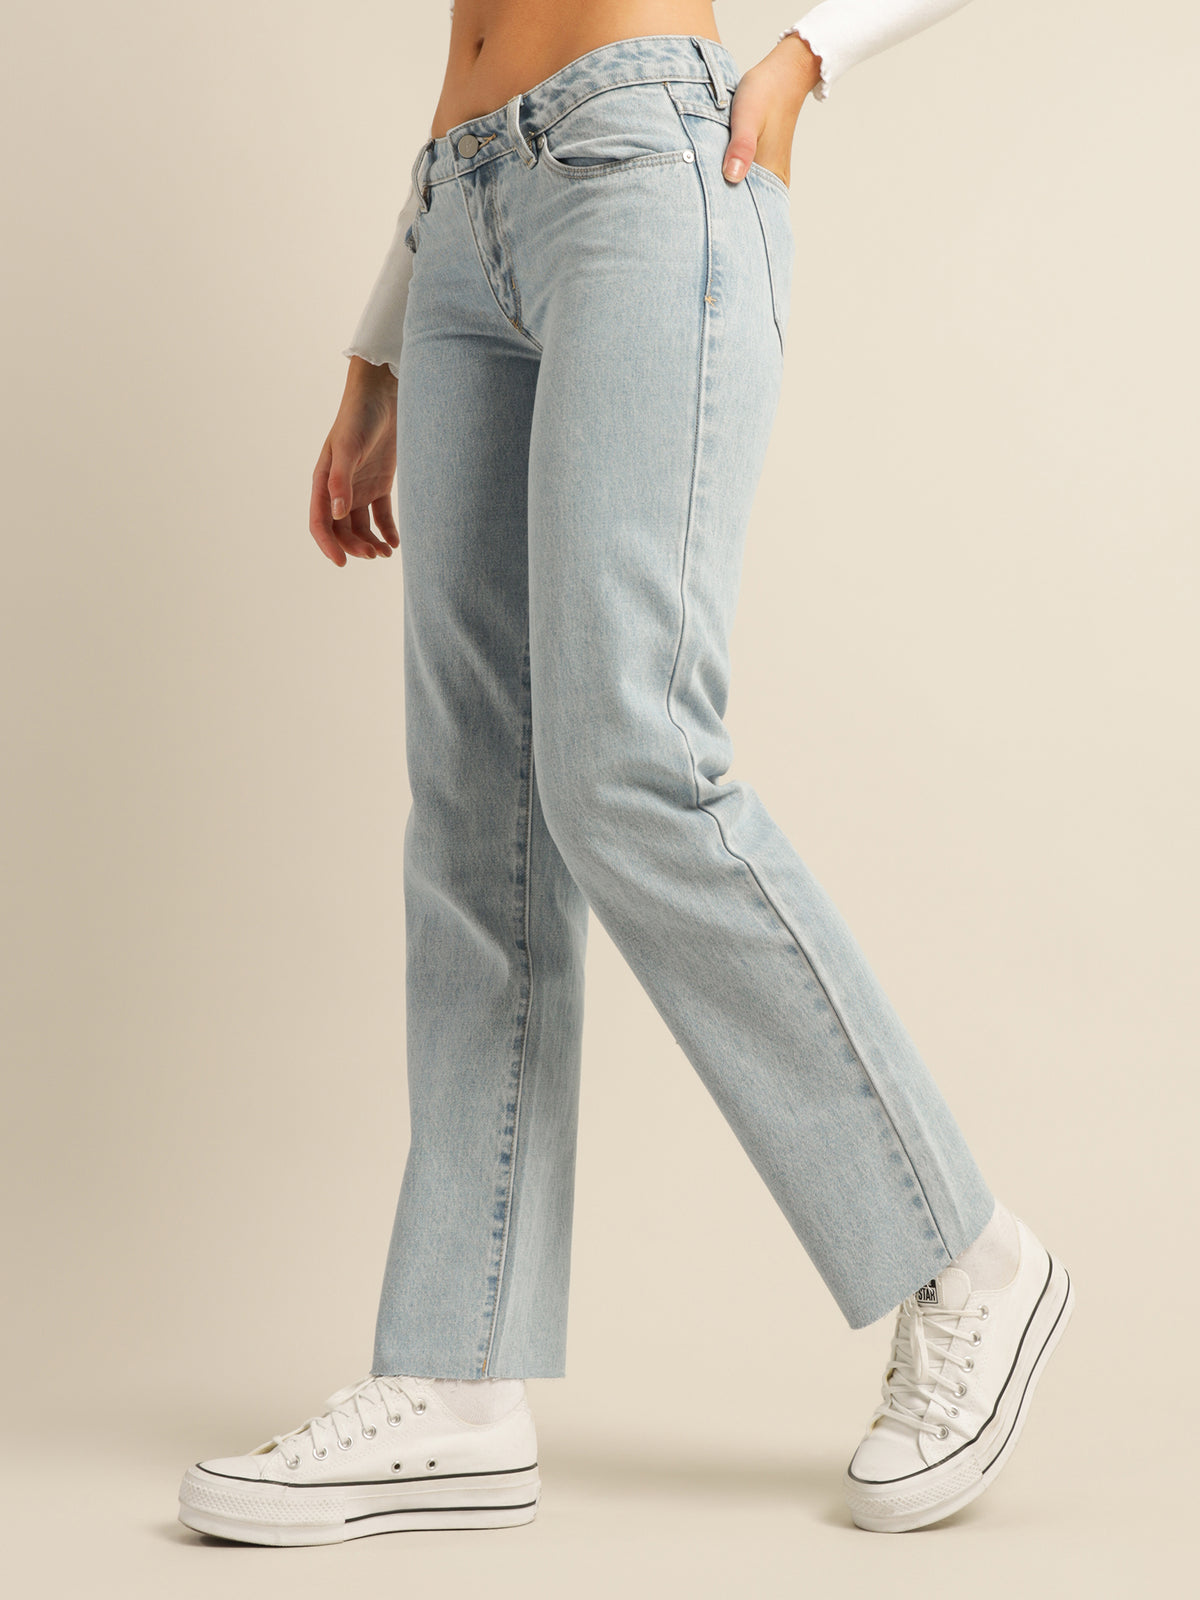 A 99 Low Straight Jeans in Walk Away Blue